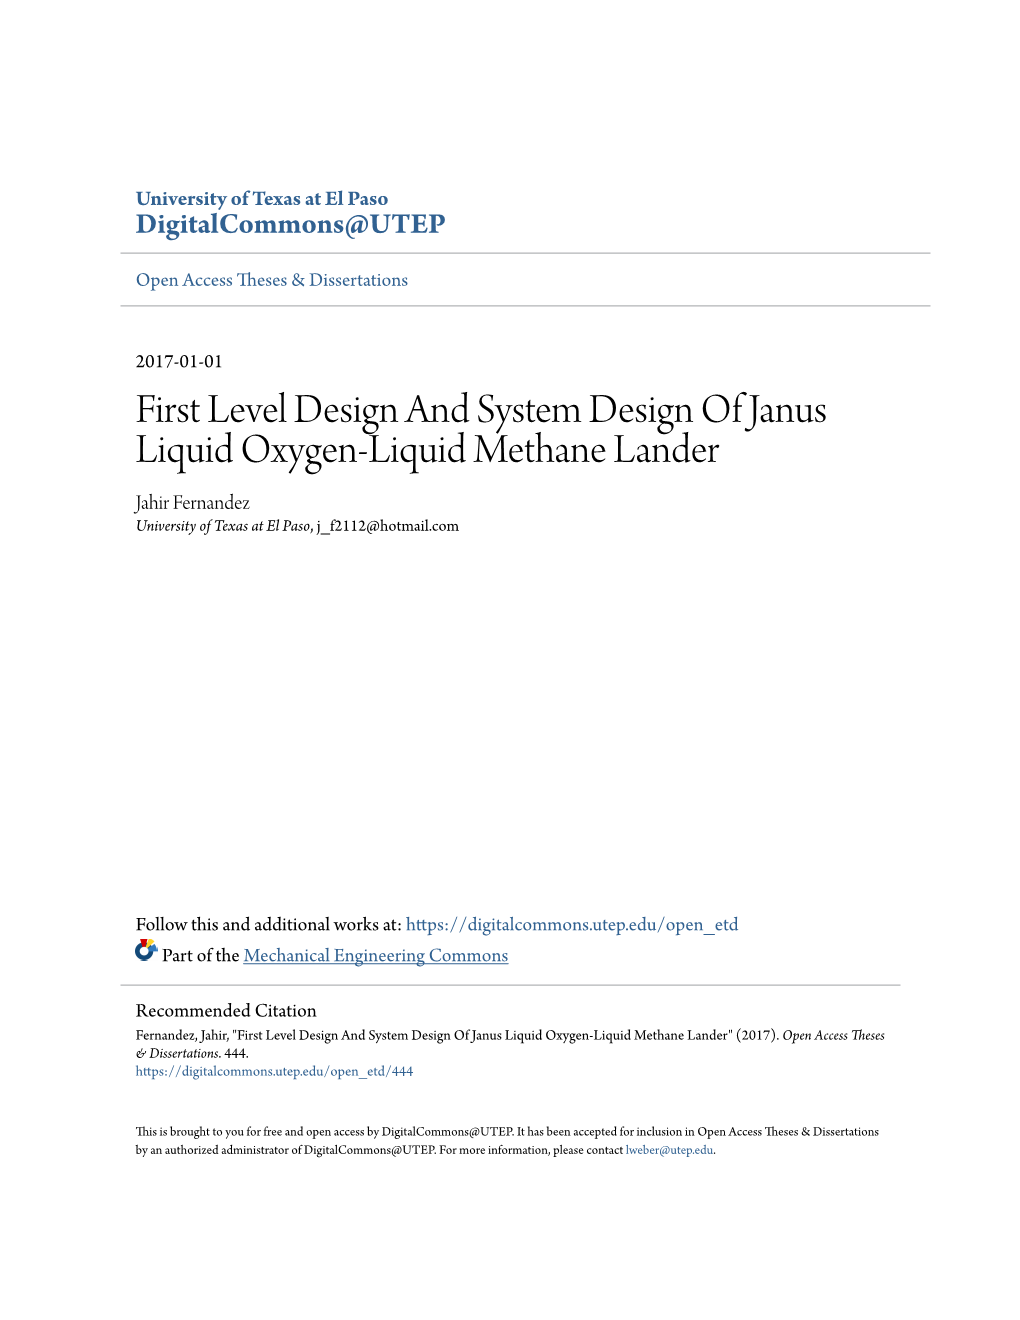 First Level Design and System Design of Janus Liquid Oxygen-Liquid Methane Lander Jahir Fernandez University of Texas at El Paso, J F2112@Hotmail.Com